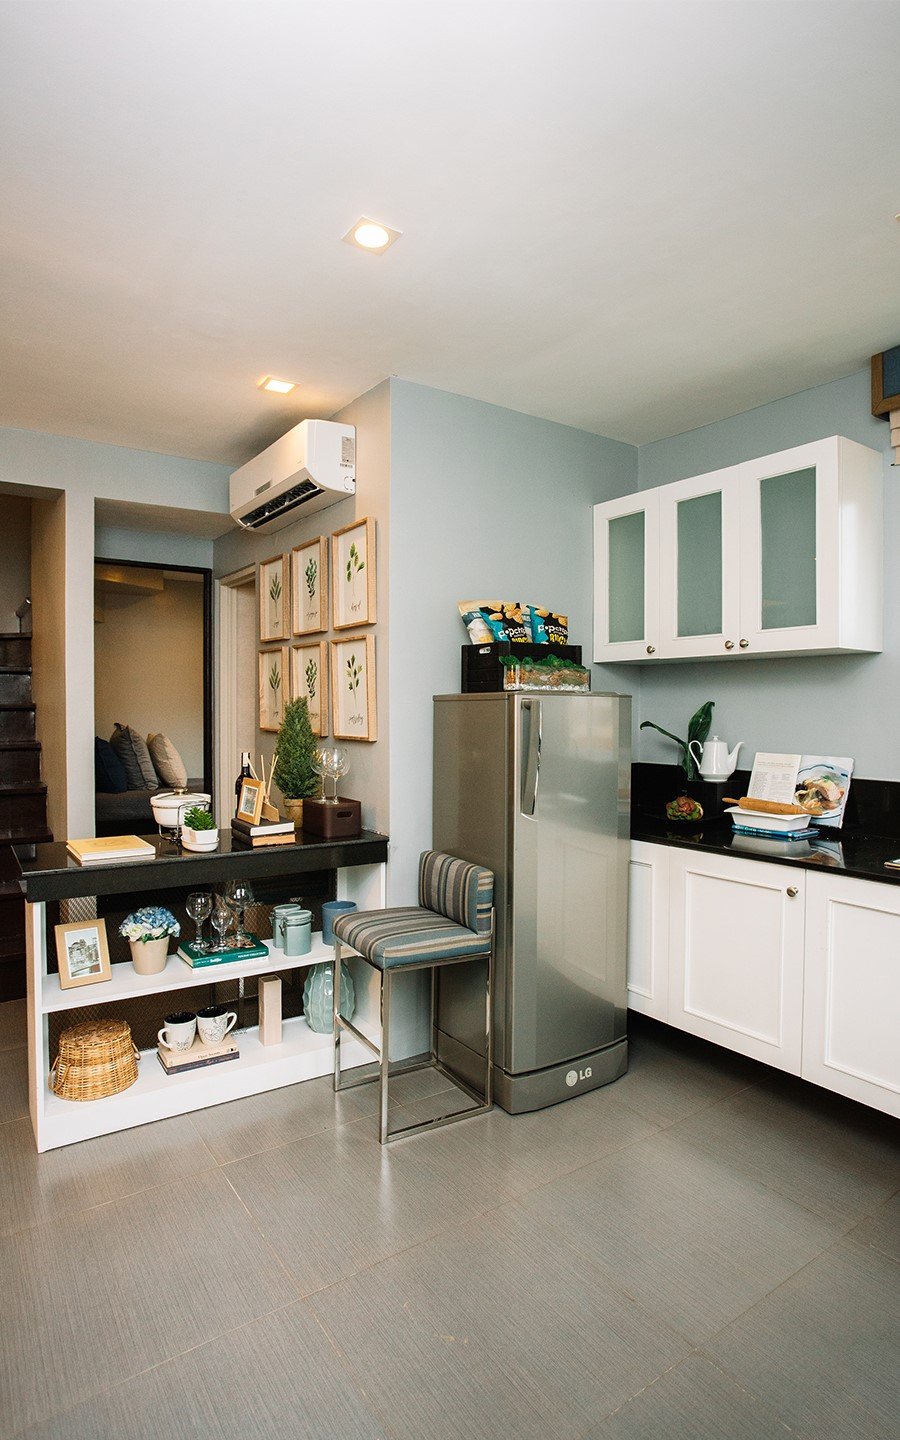 Ella home kitchen area with refrigerator